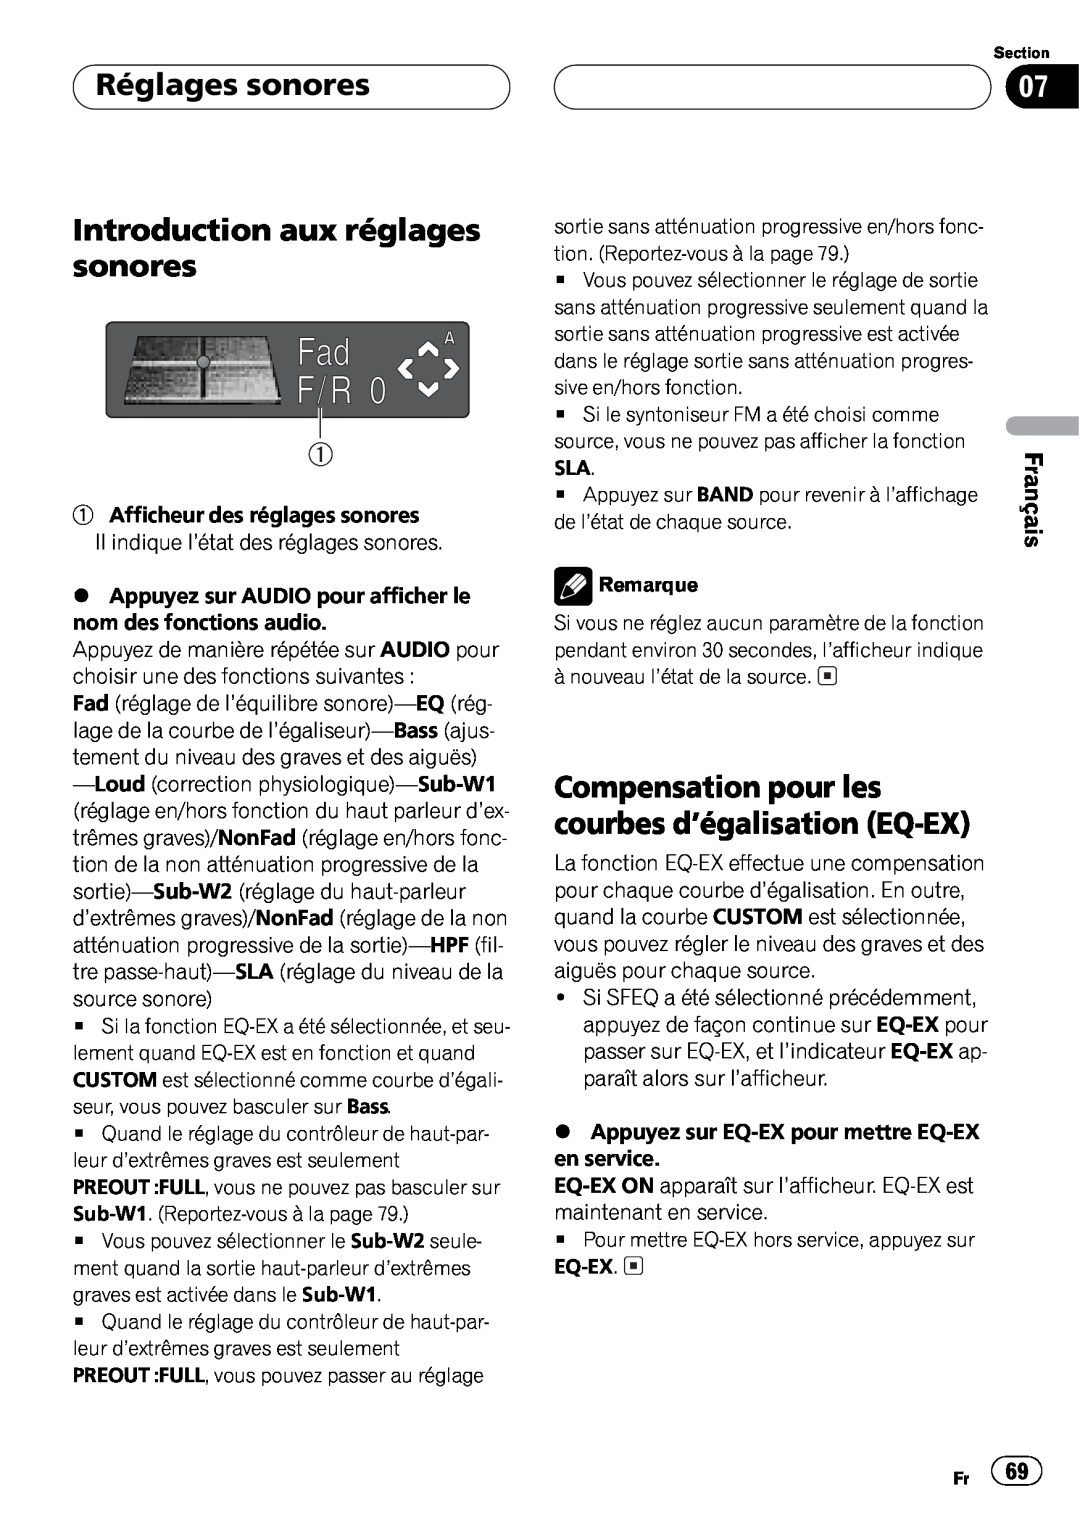 Pioneer DEH-P6500 operation manual 